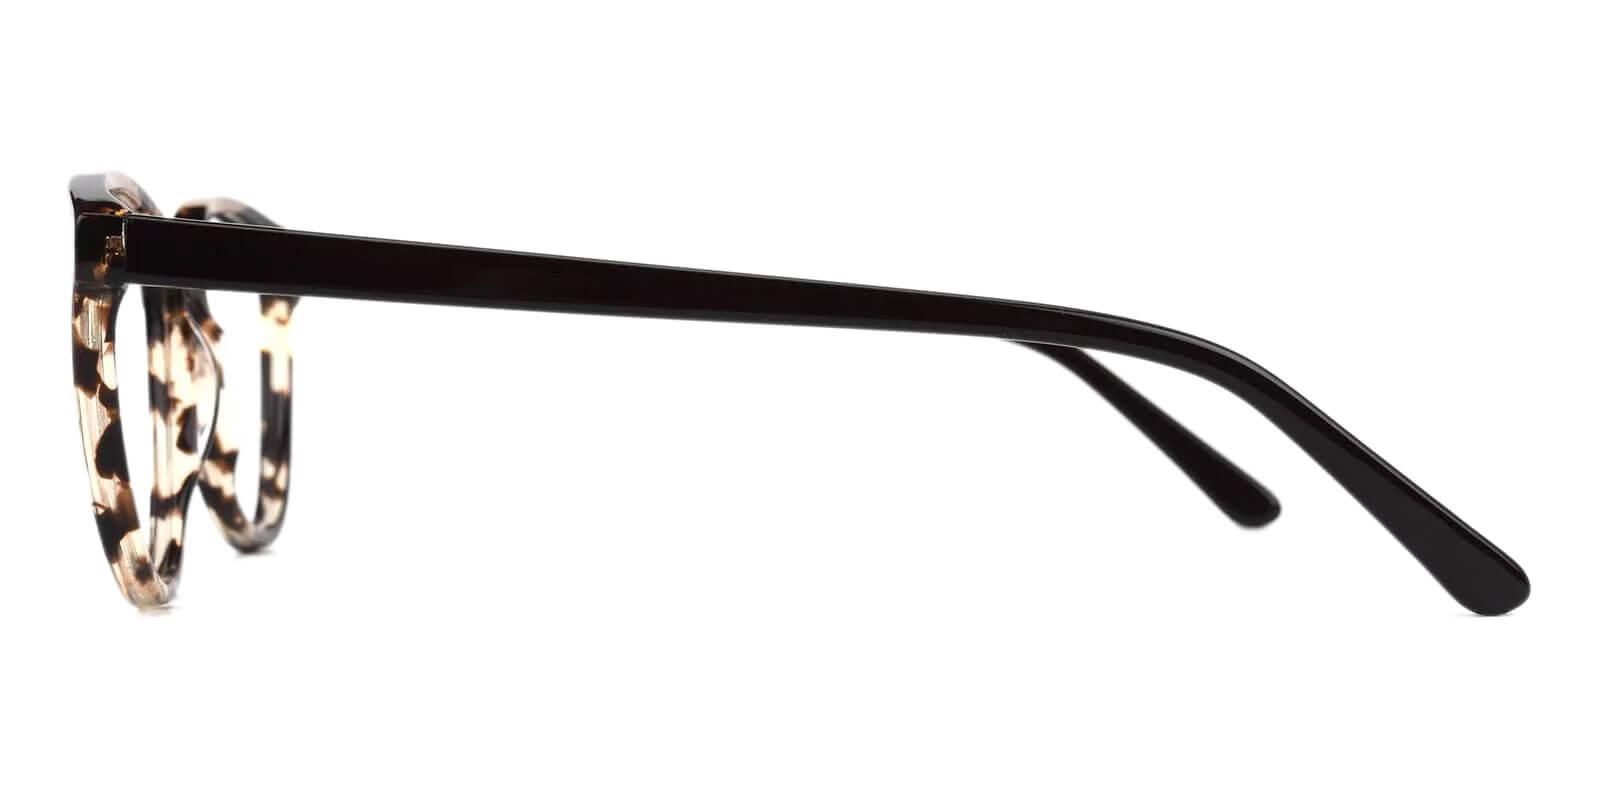 Joanne Leopard Acetate Eyeglasses , SpringHinges , UniversalBridgeFit Frames from ABBE Glasses